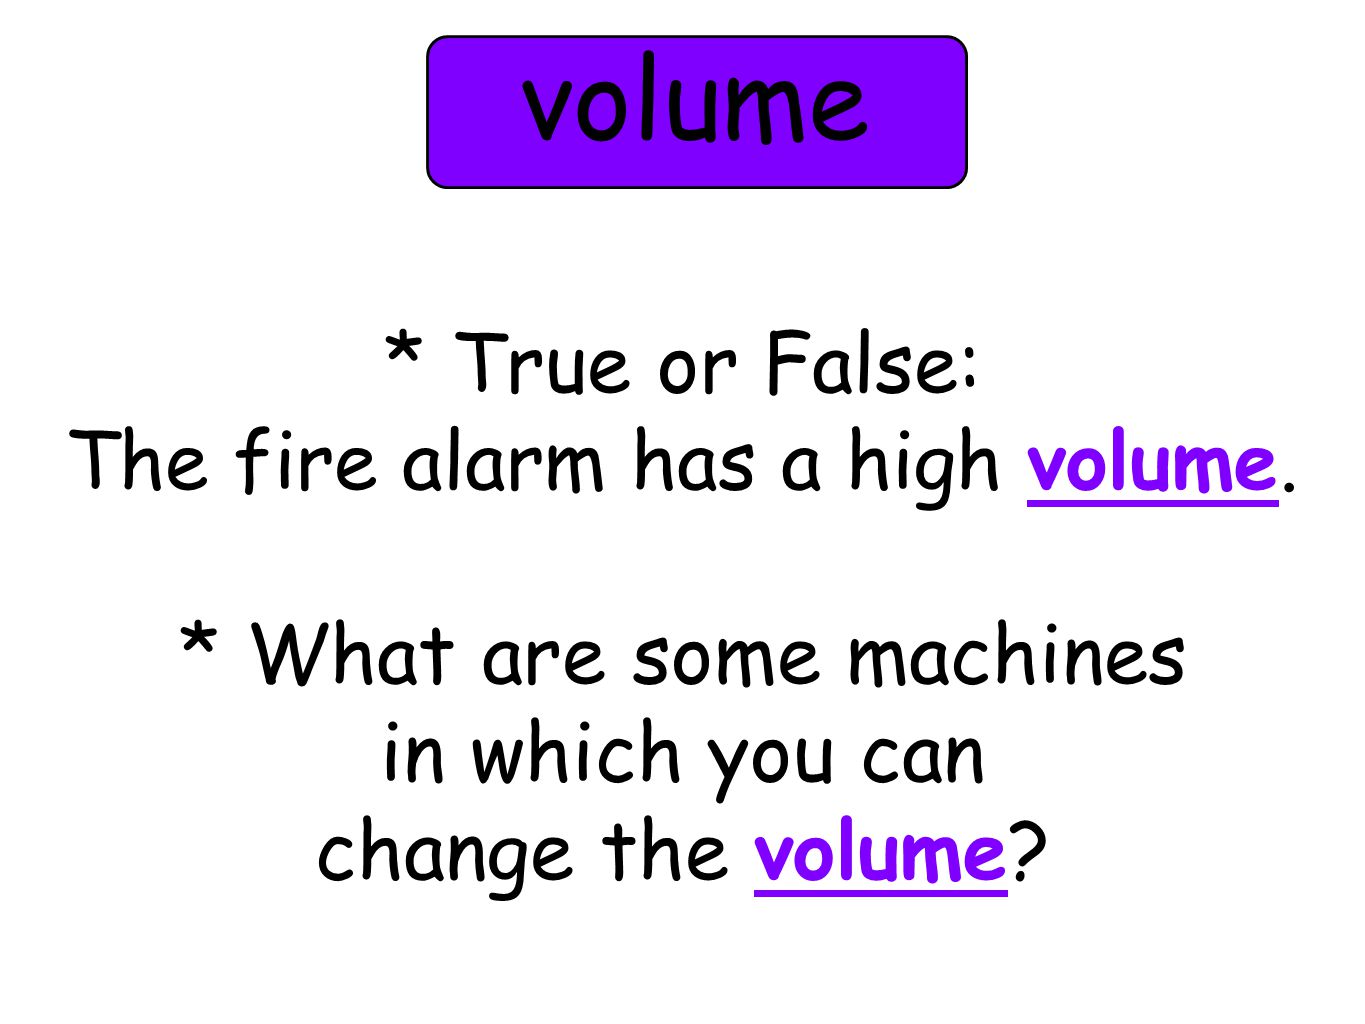 * True or False: The fire alarm has a high volume.